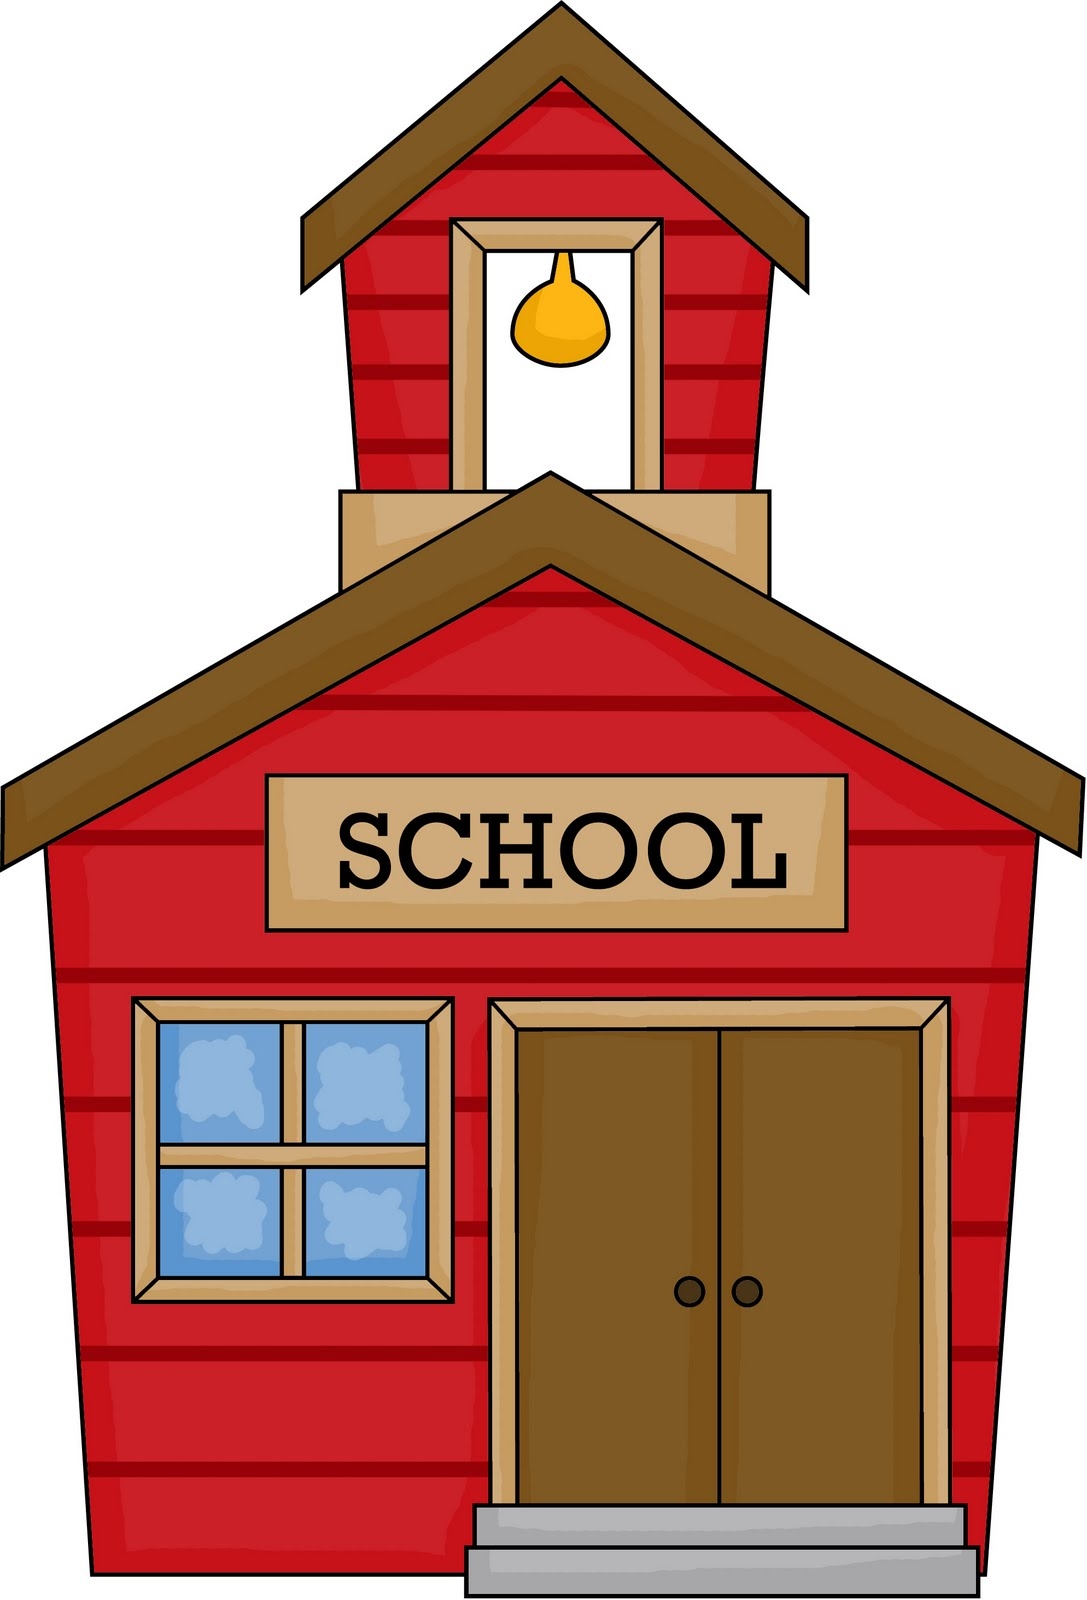 schoolhouse clipart one room schoolhouse